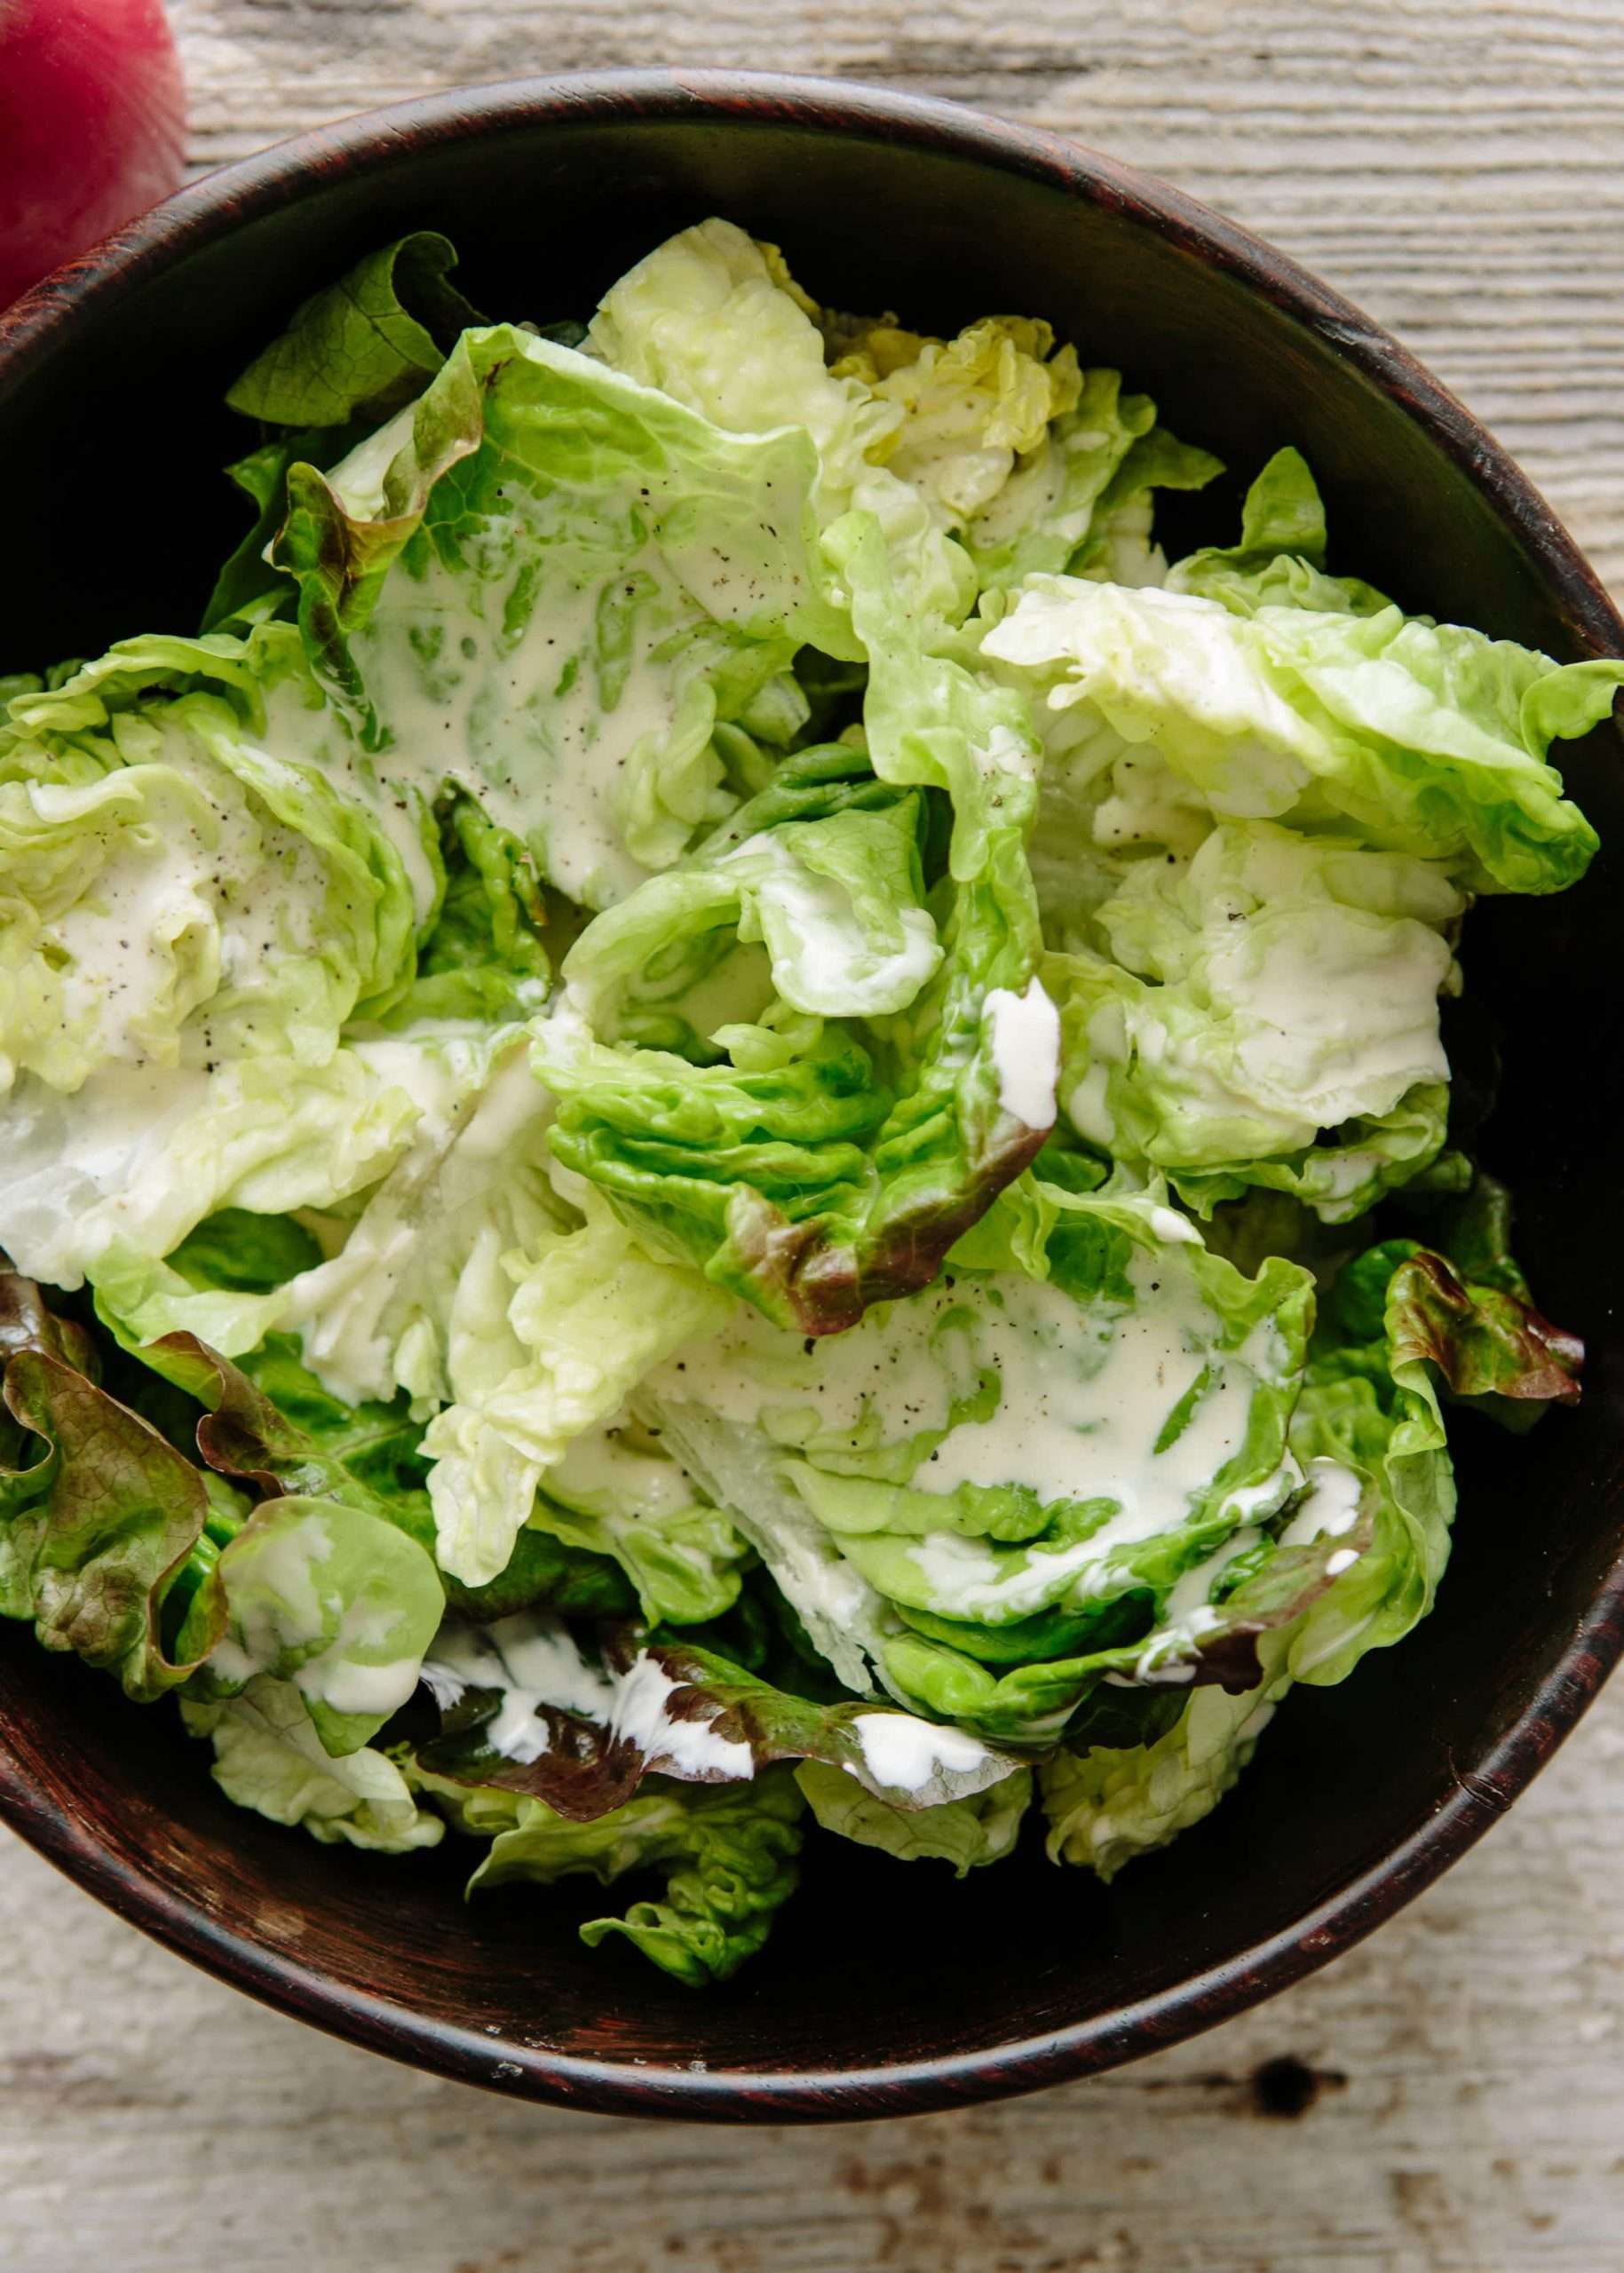 Salad Dressings You Can Make with Greek Yogurt